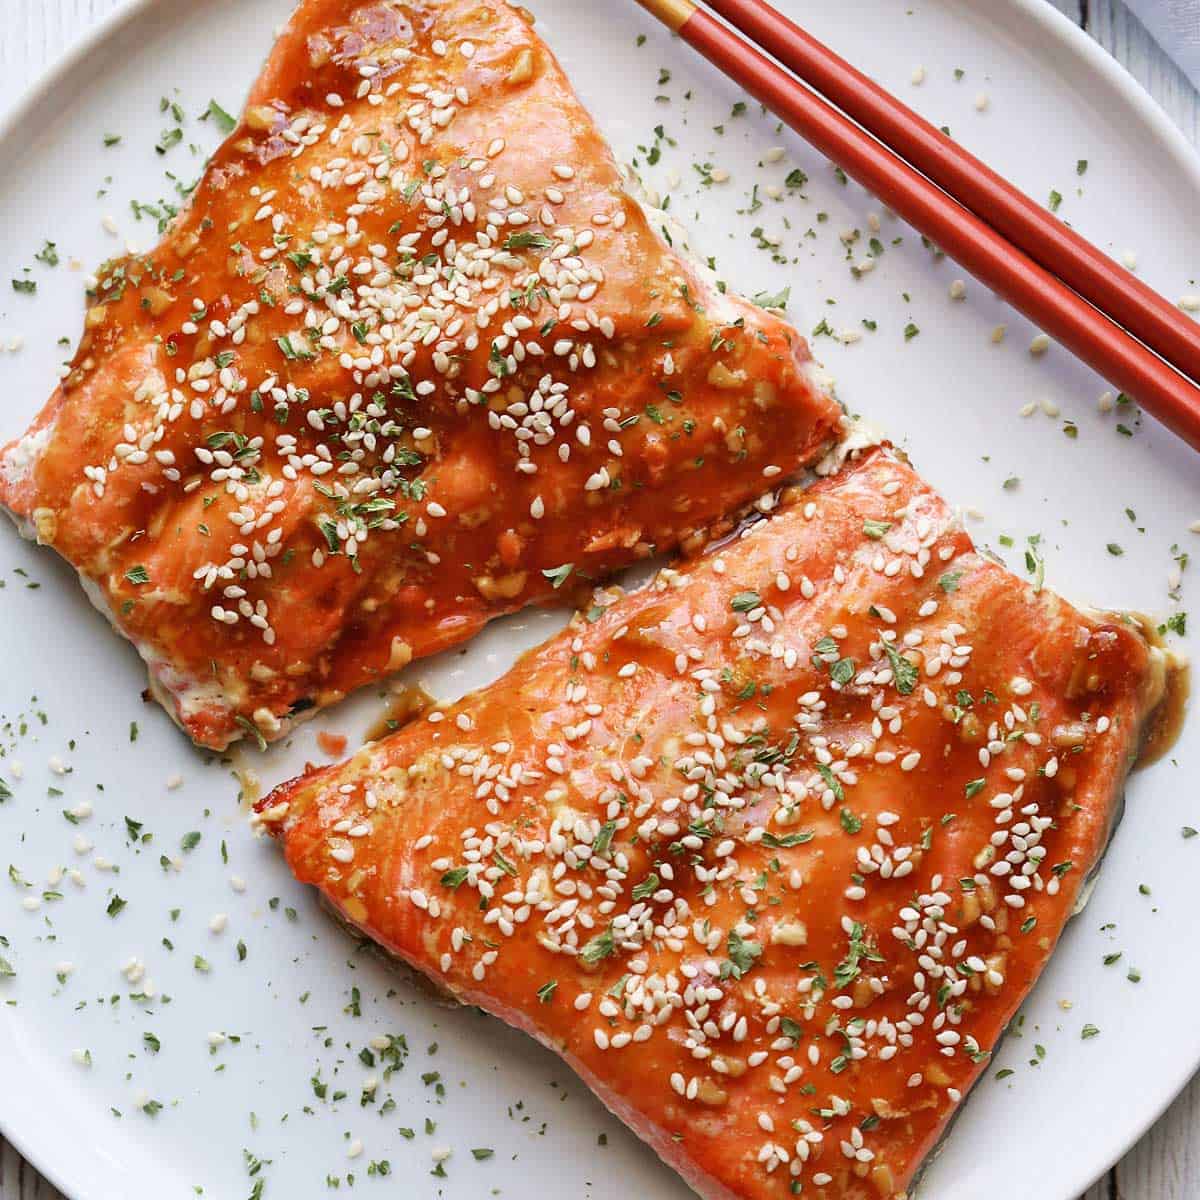 Teriyaki salmon served on a white plate with chopsticks.